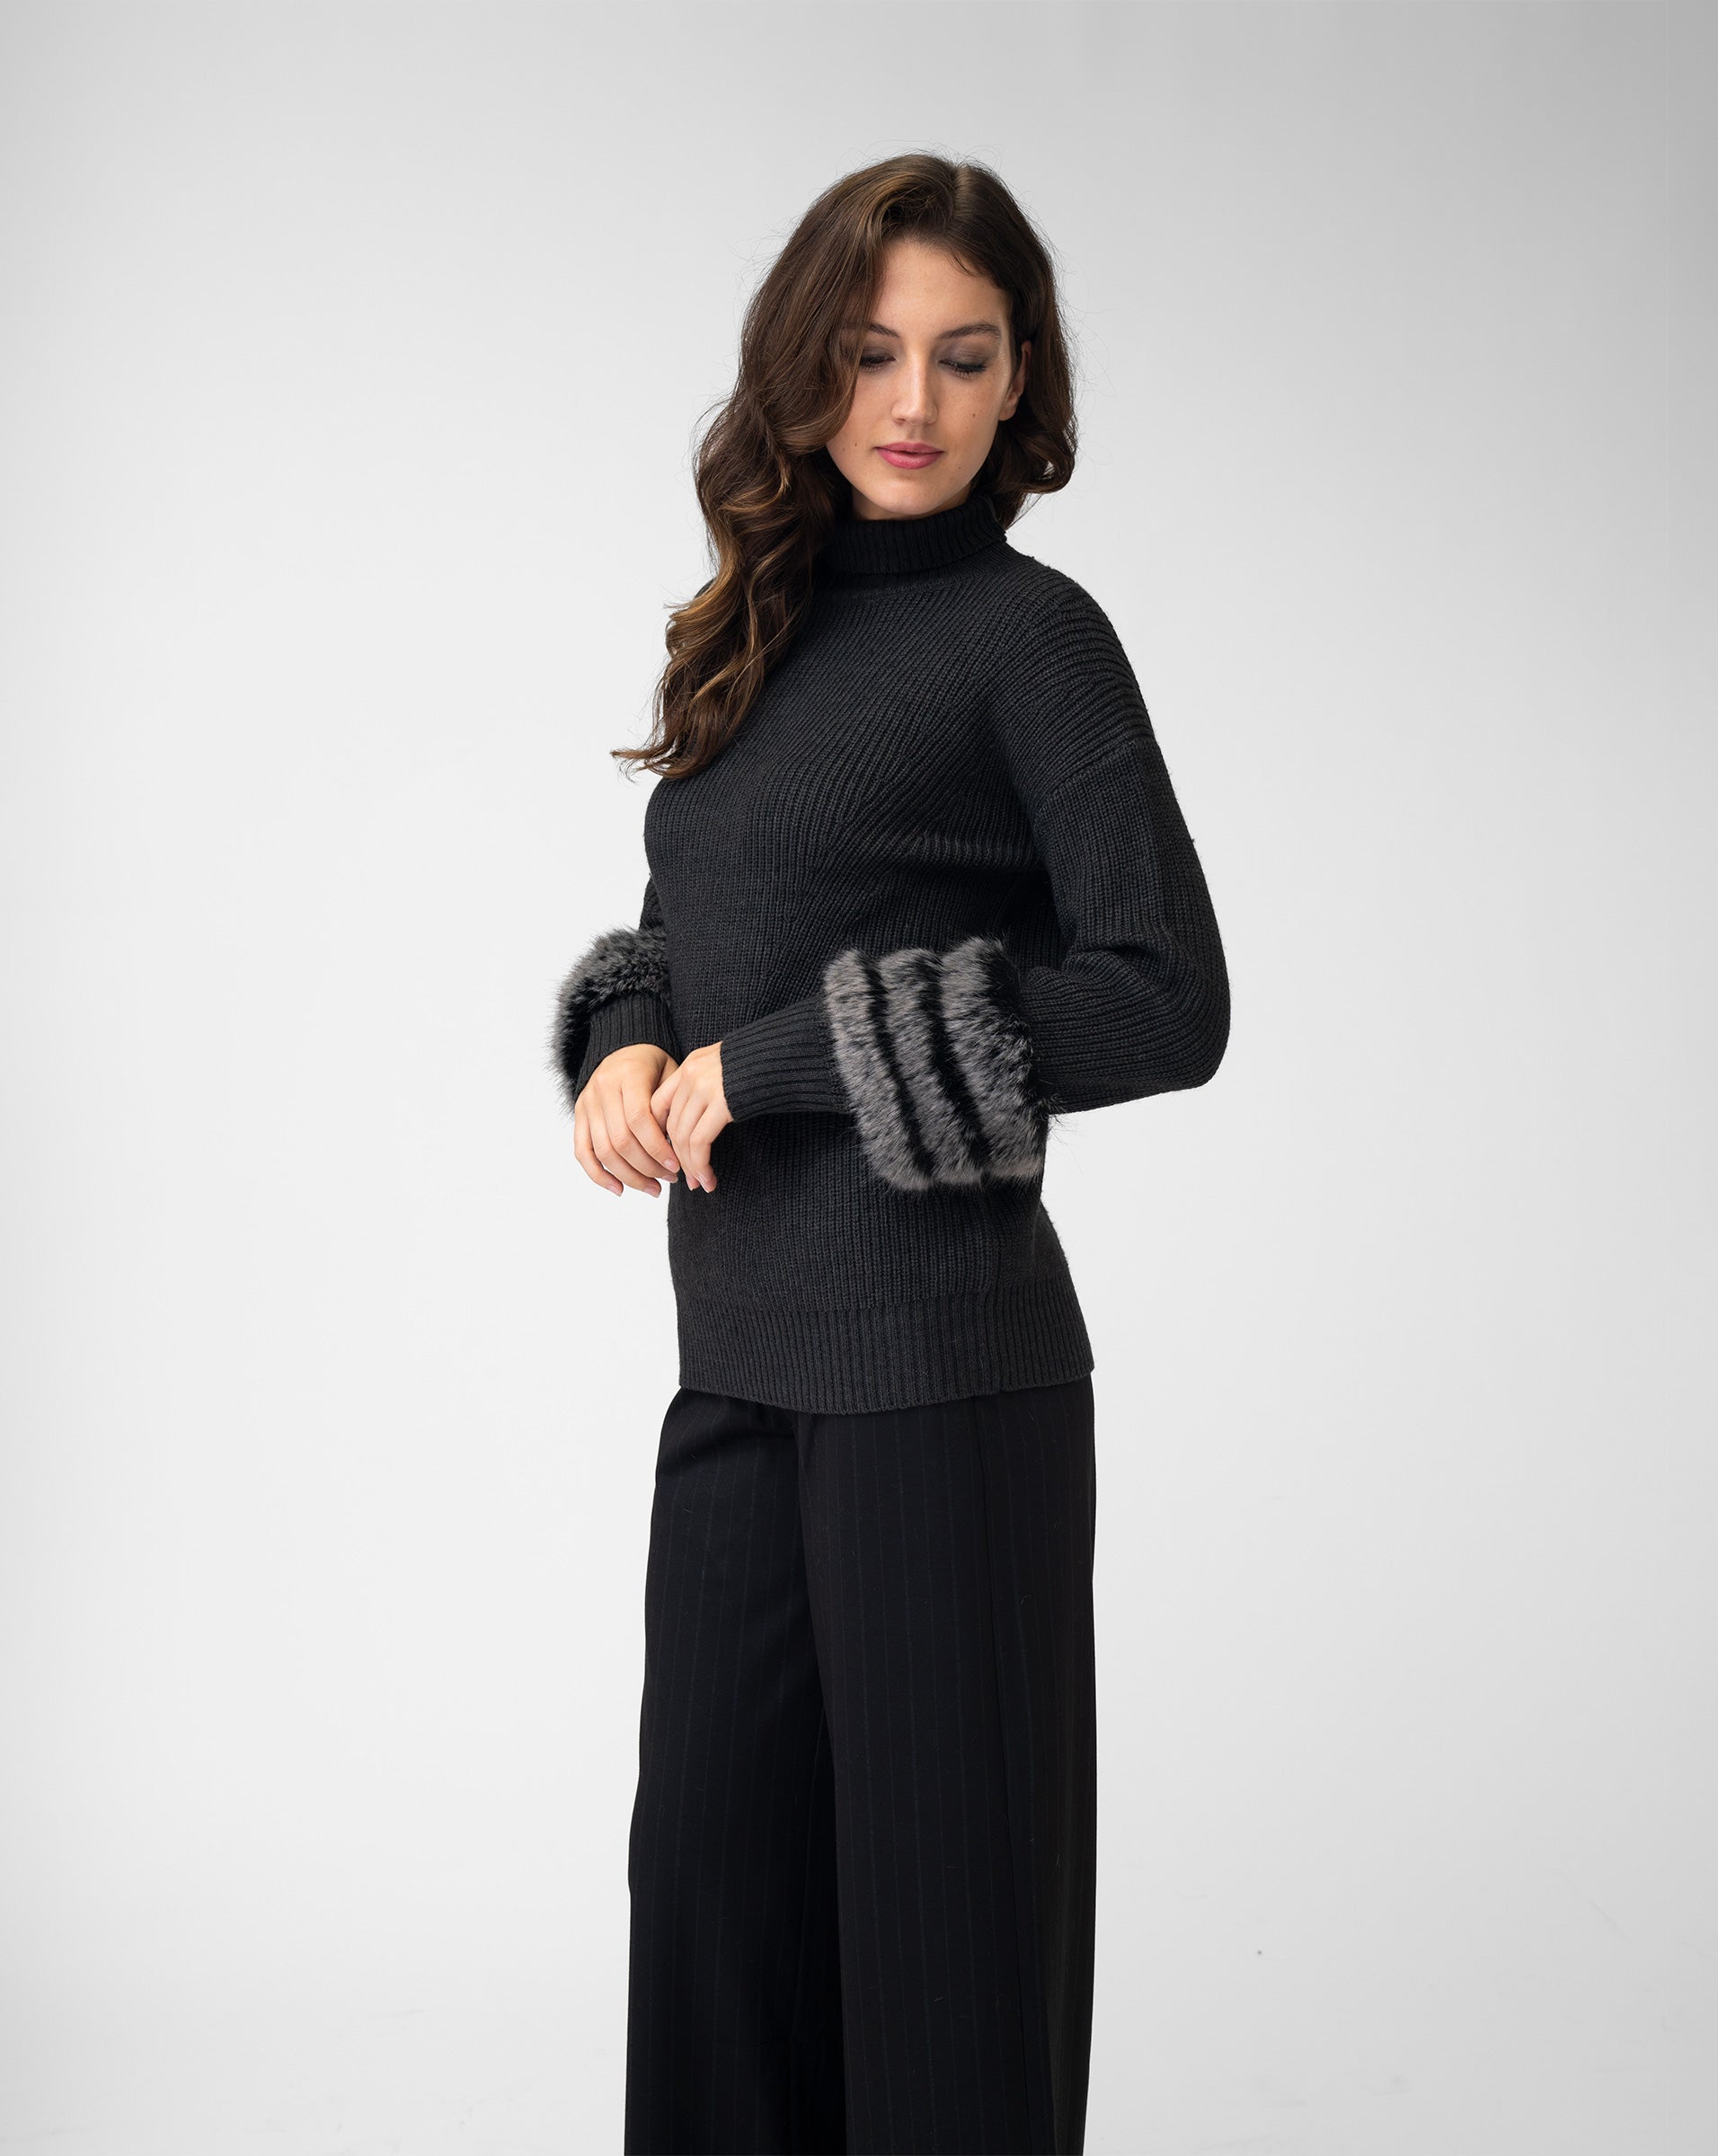 Aunavey Women's Faux Fur Trim Collar Cuffs Cardigan Sweaters